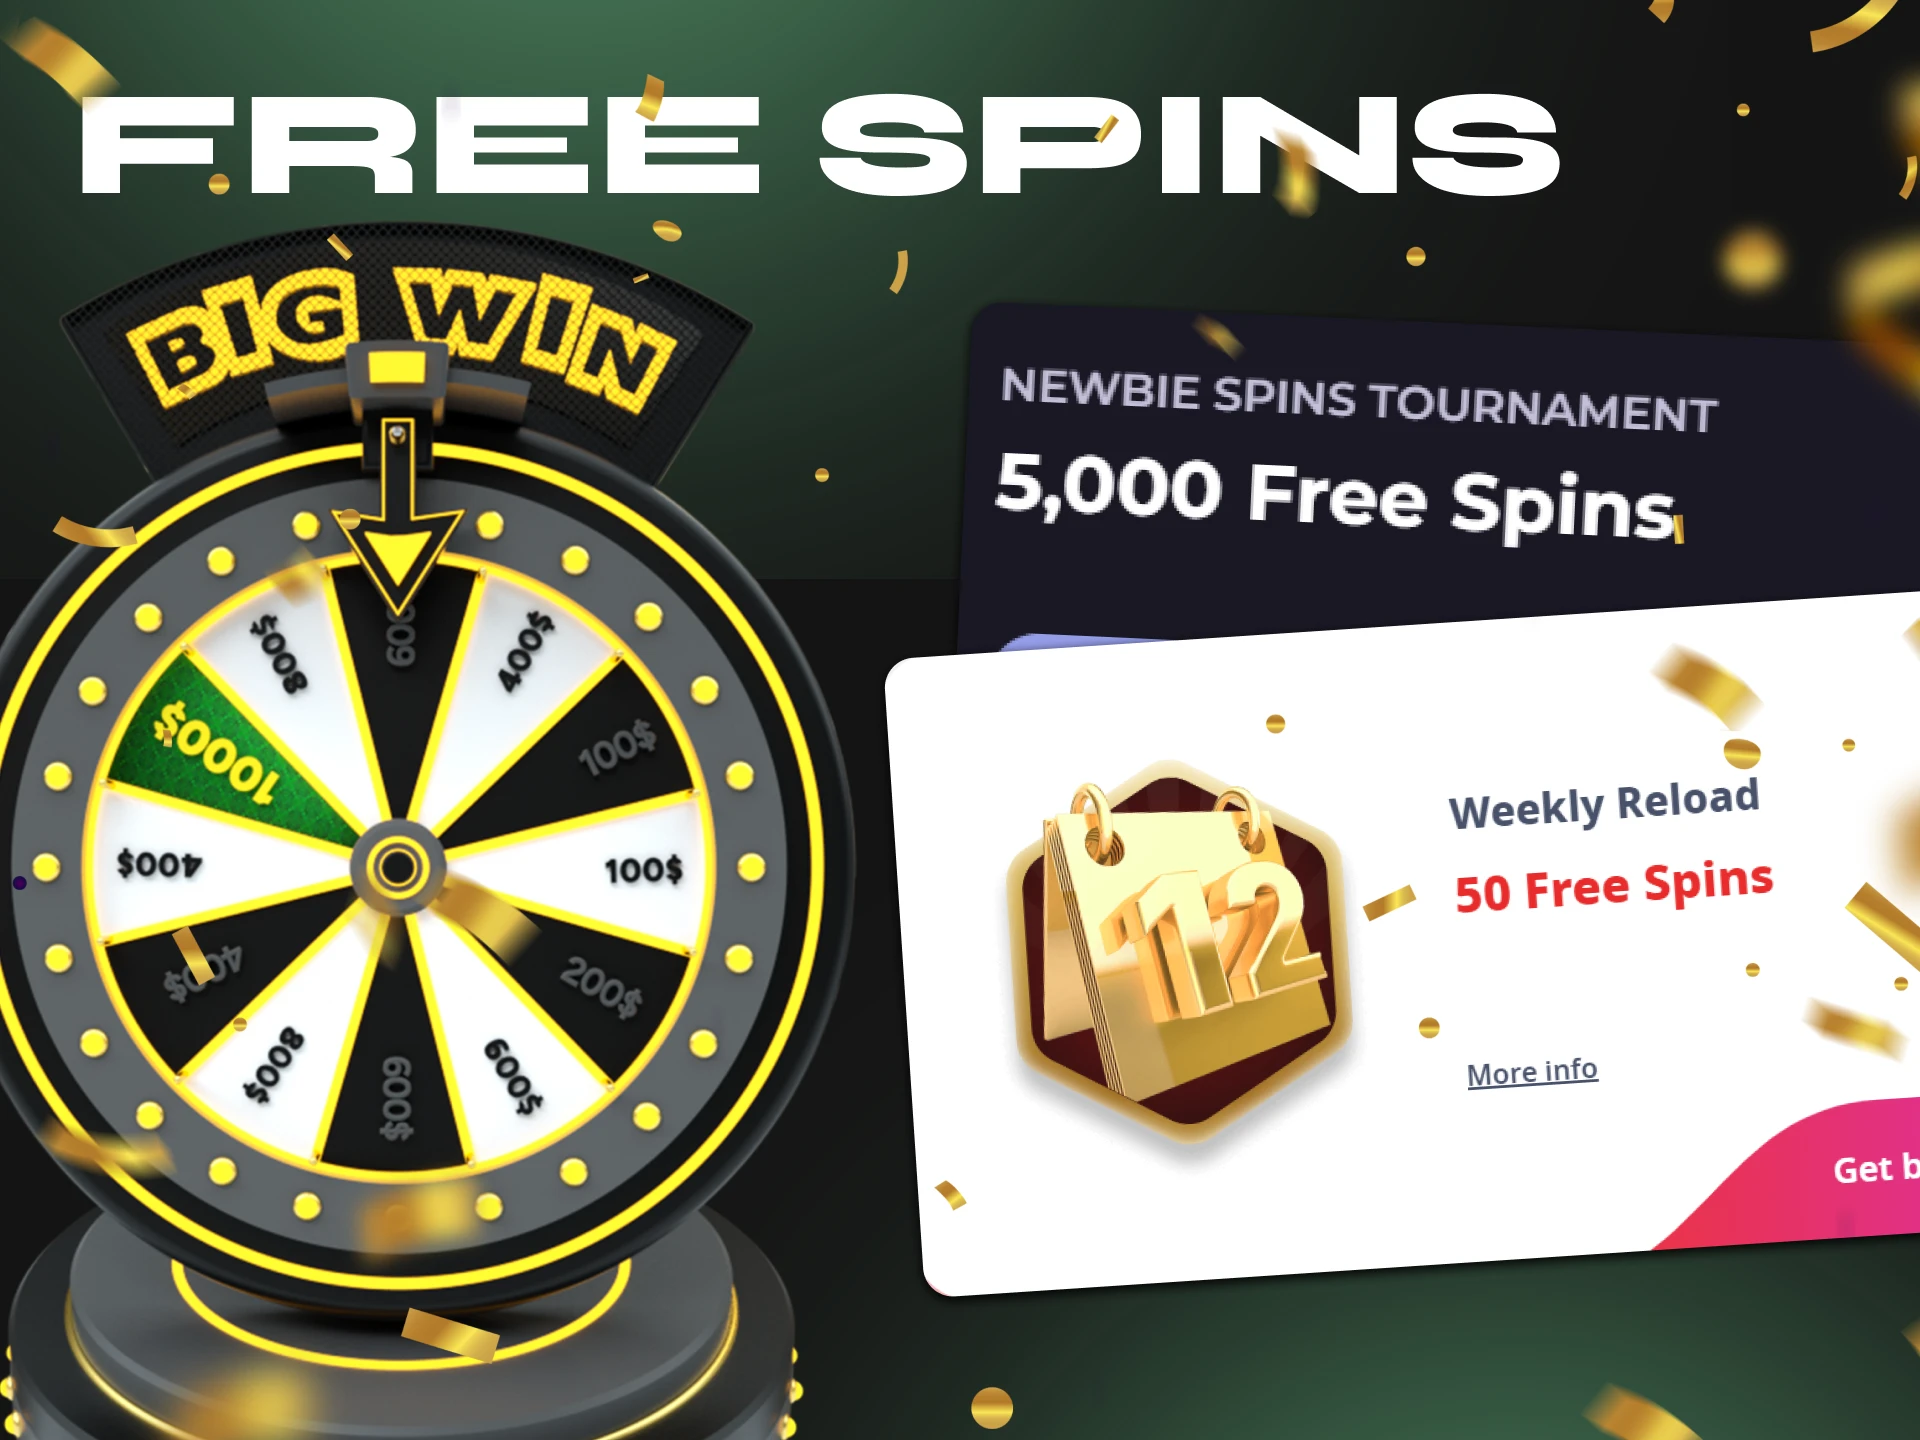 Get the Free Spins Bonus to spend your Blackjack winnings.